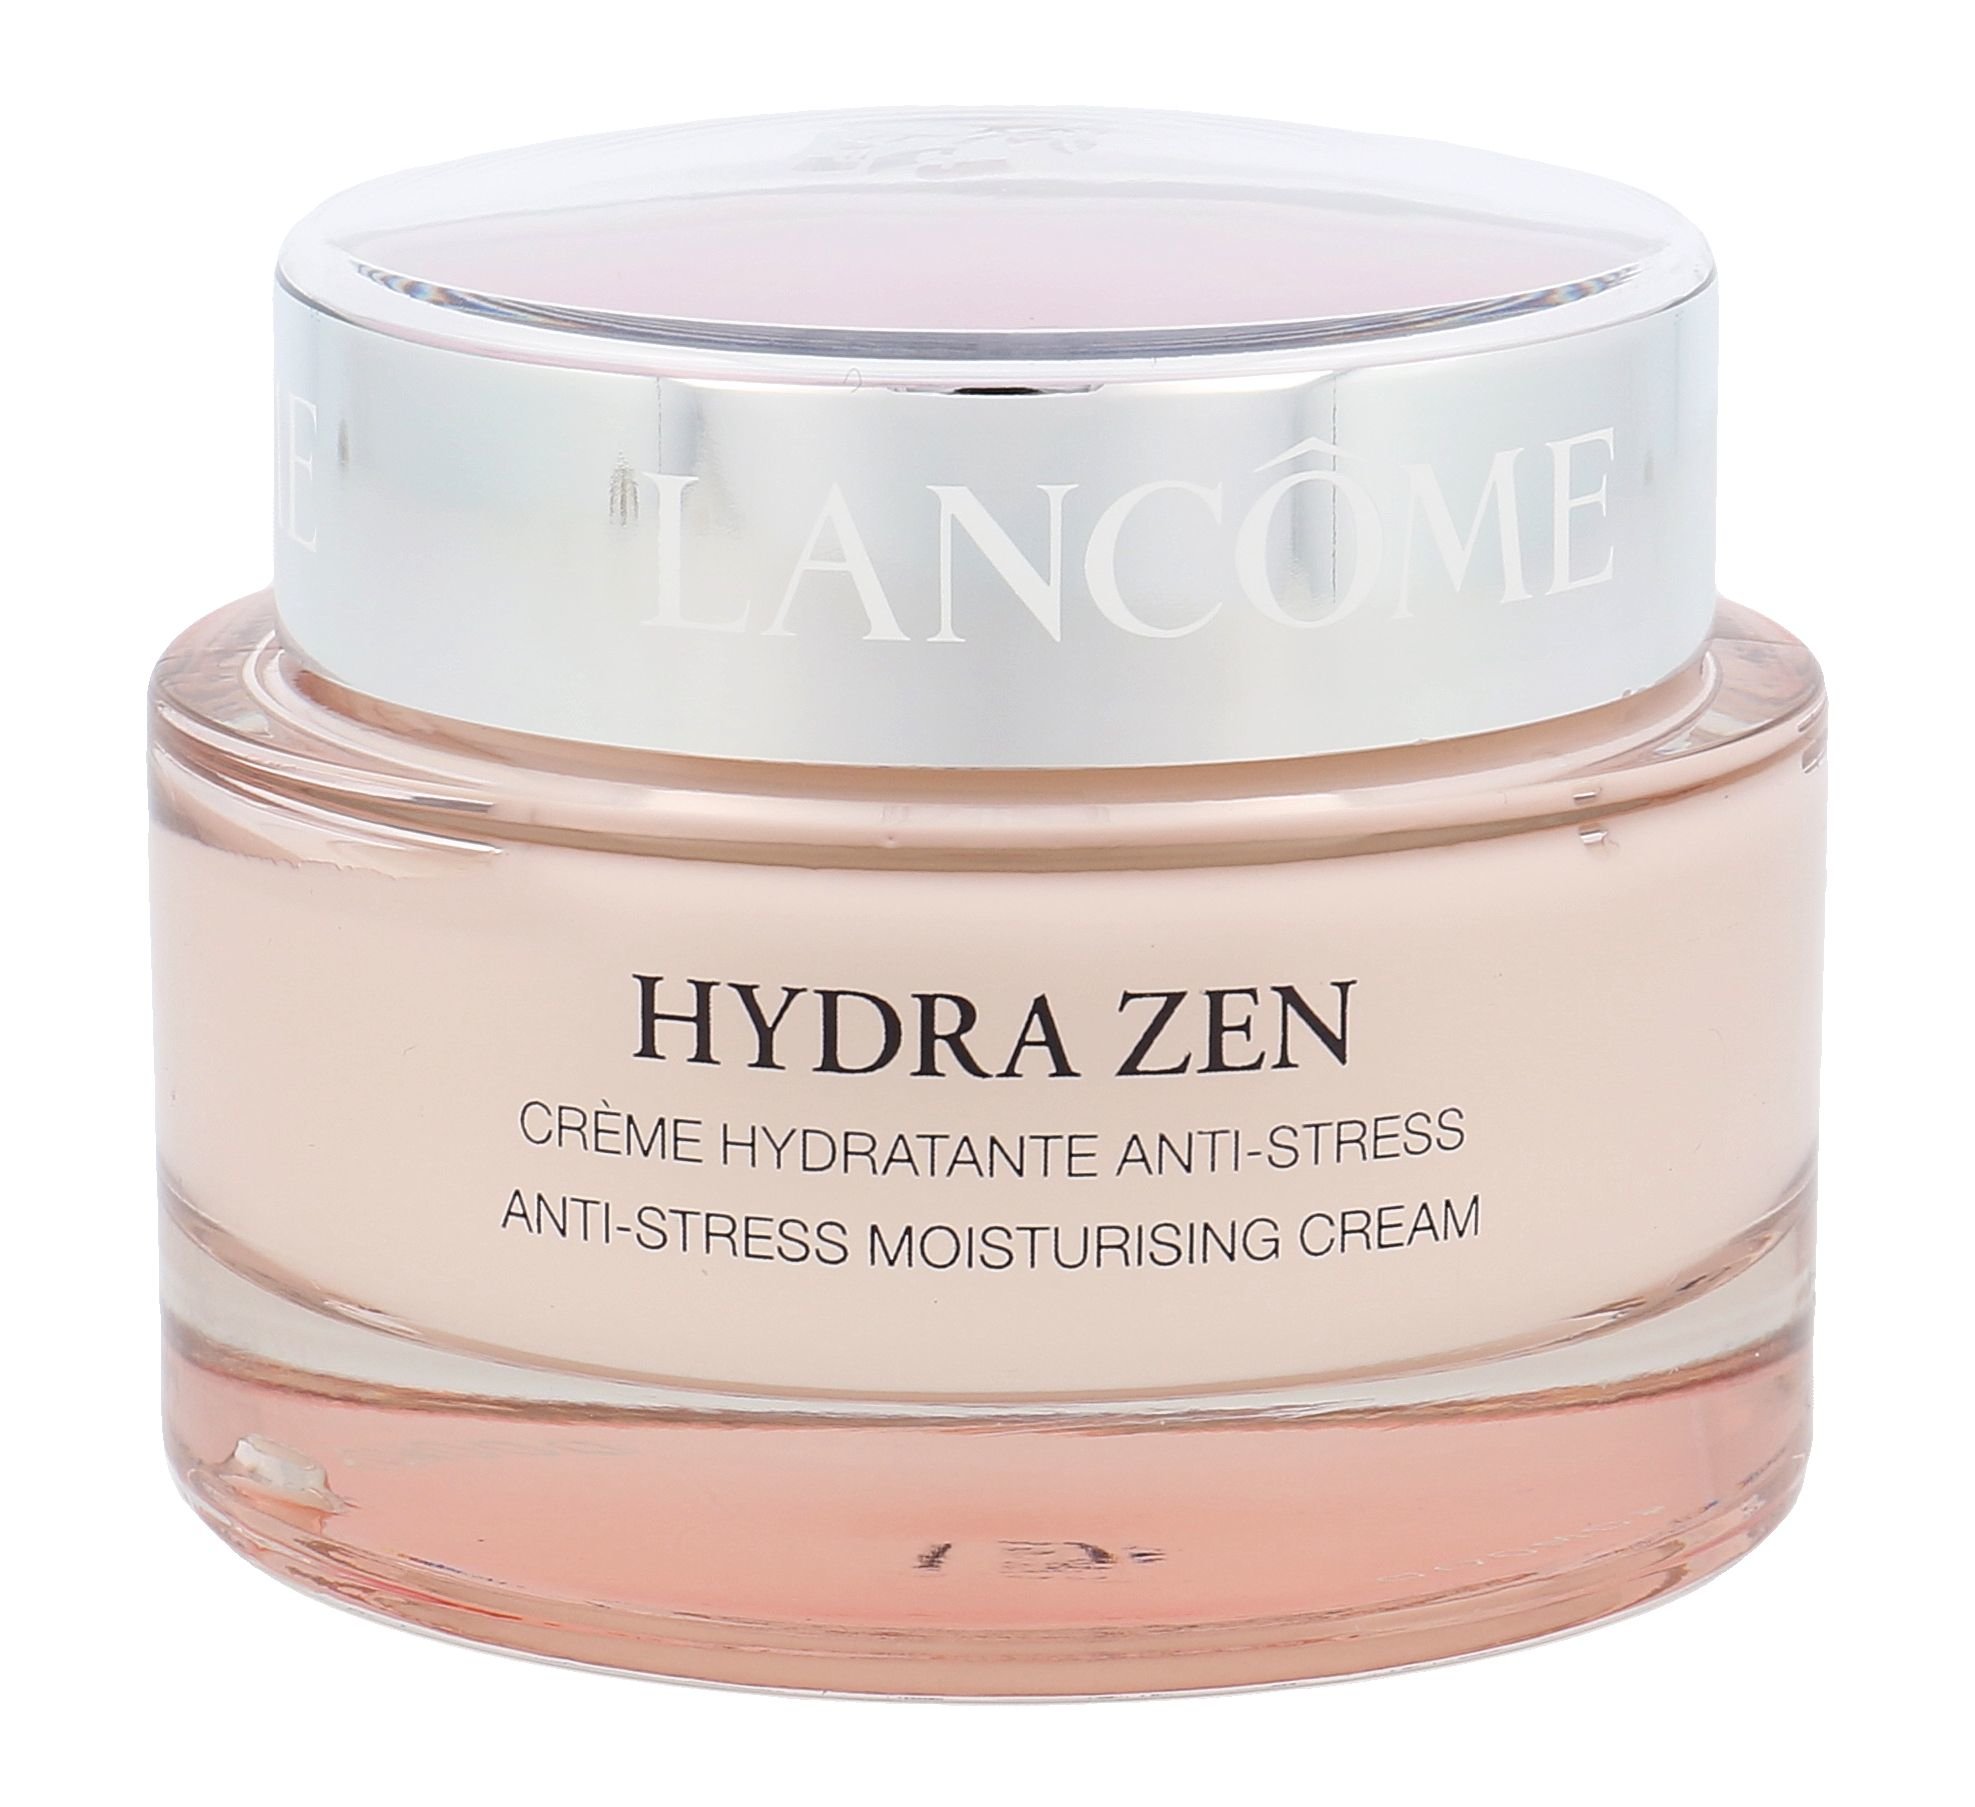 Lancome Hydra Zen Anti-Stress Moisturising Cream